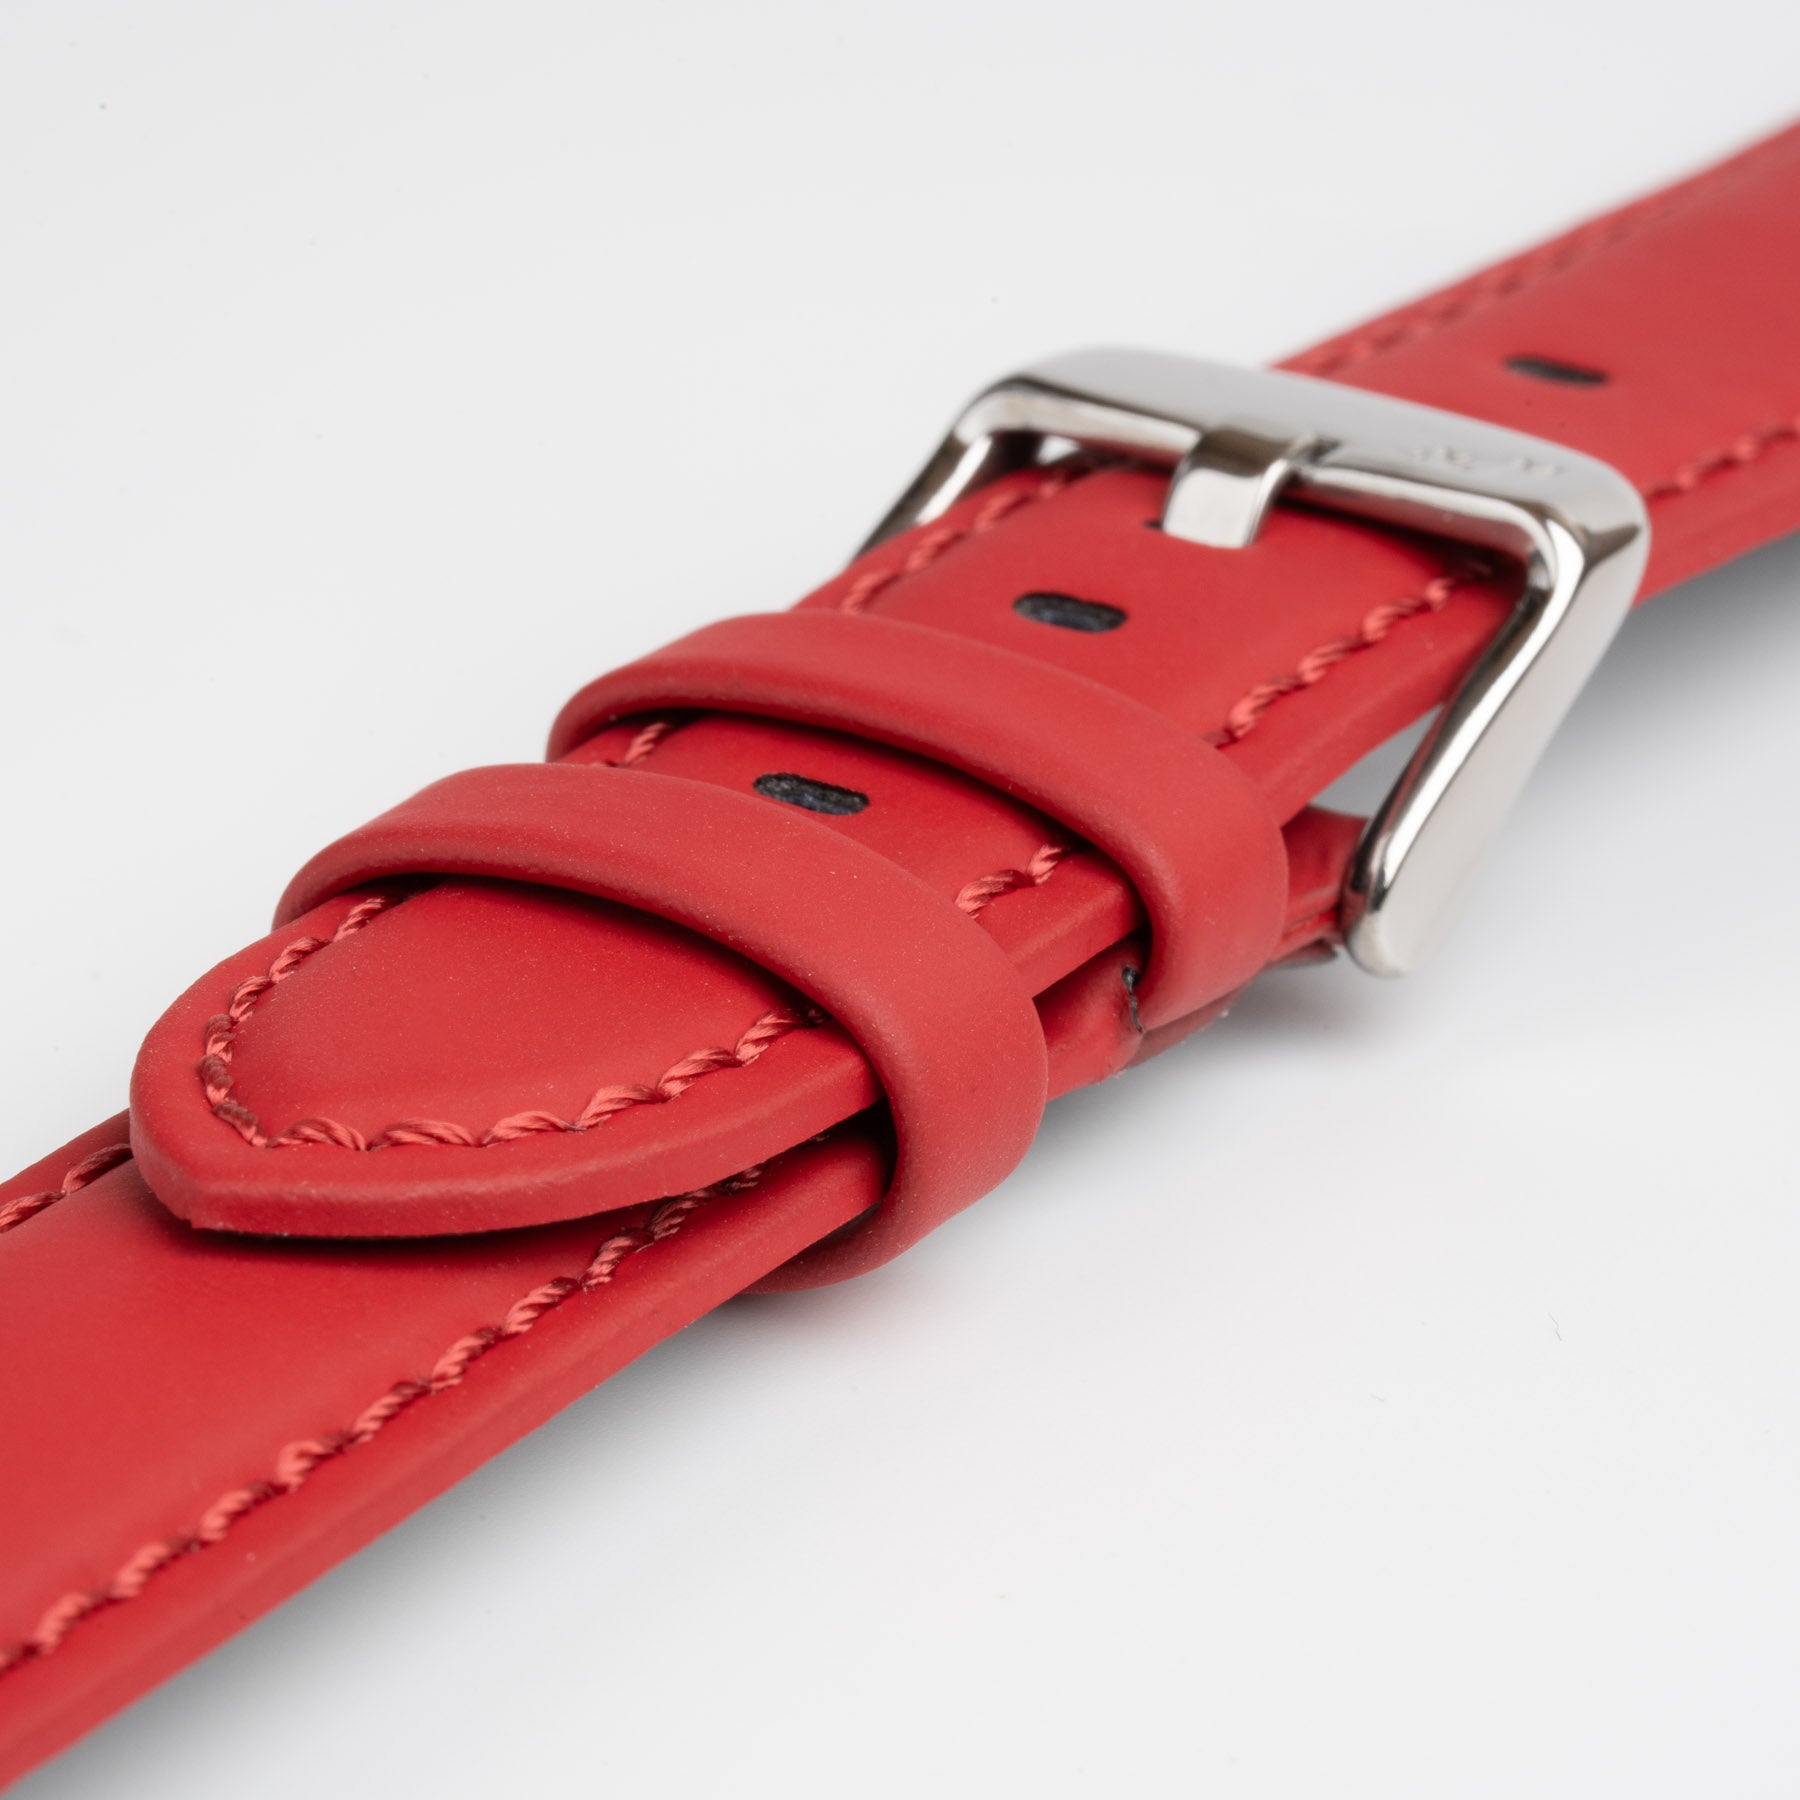 Capri Eco Tech Red Watch Strap